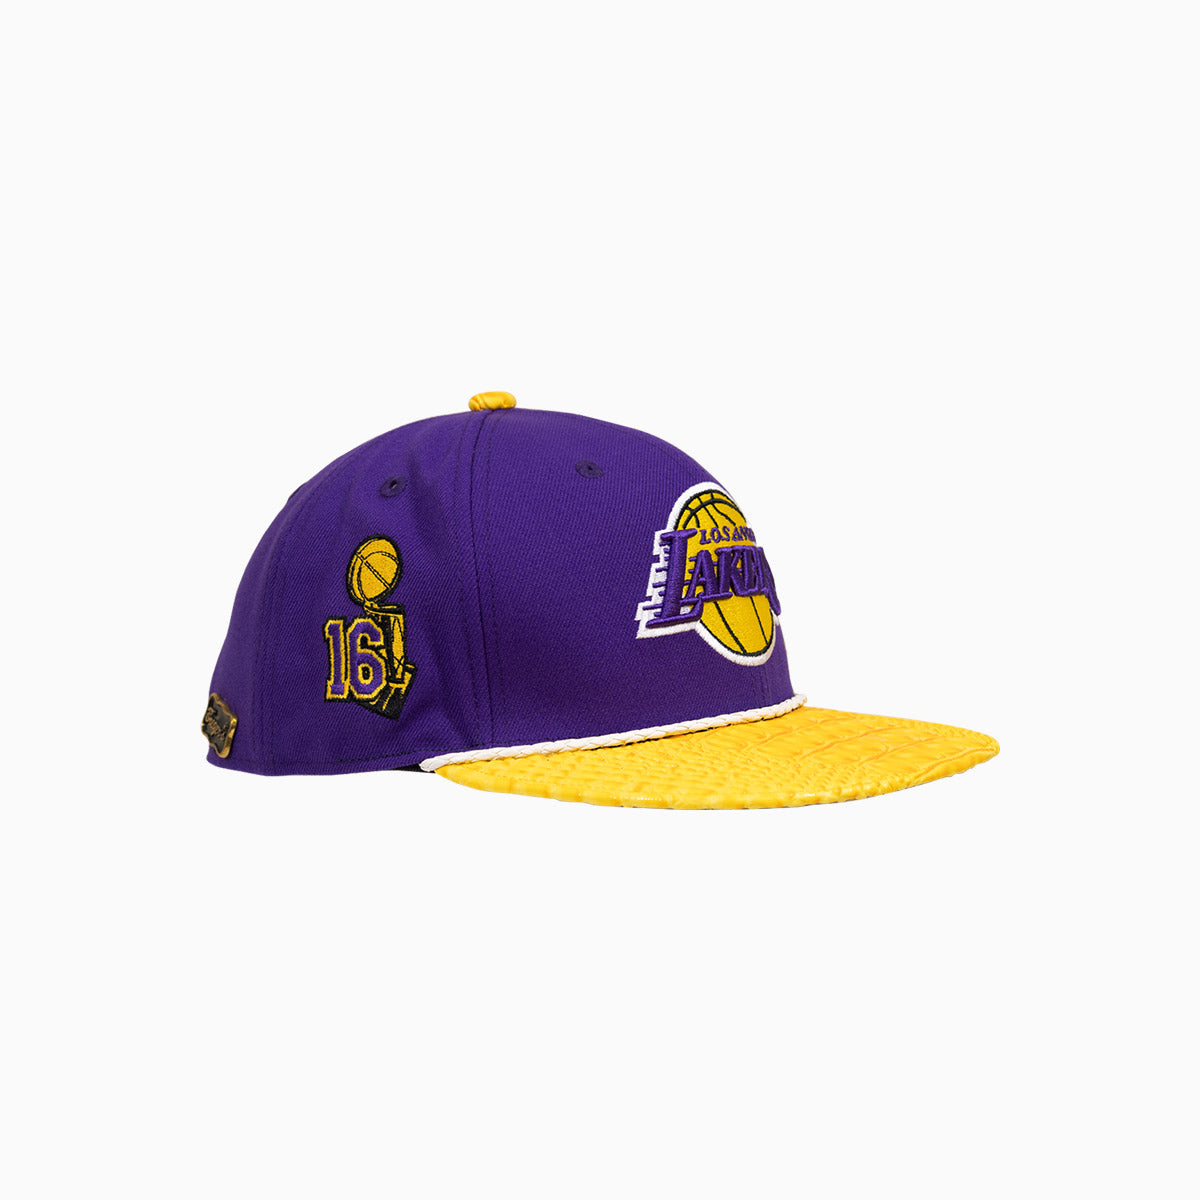 breyers-buck-50-los-angeles-lakers-hat-with-leather-visor-breyers-tlalh-purple-yellow